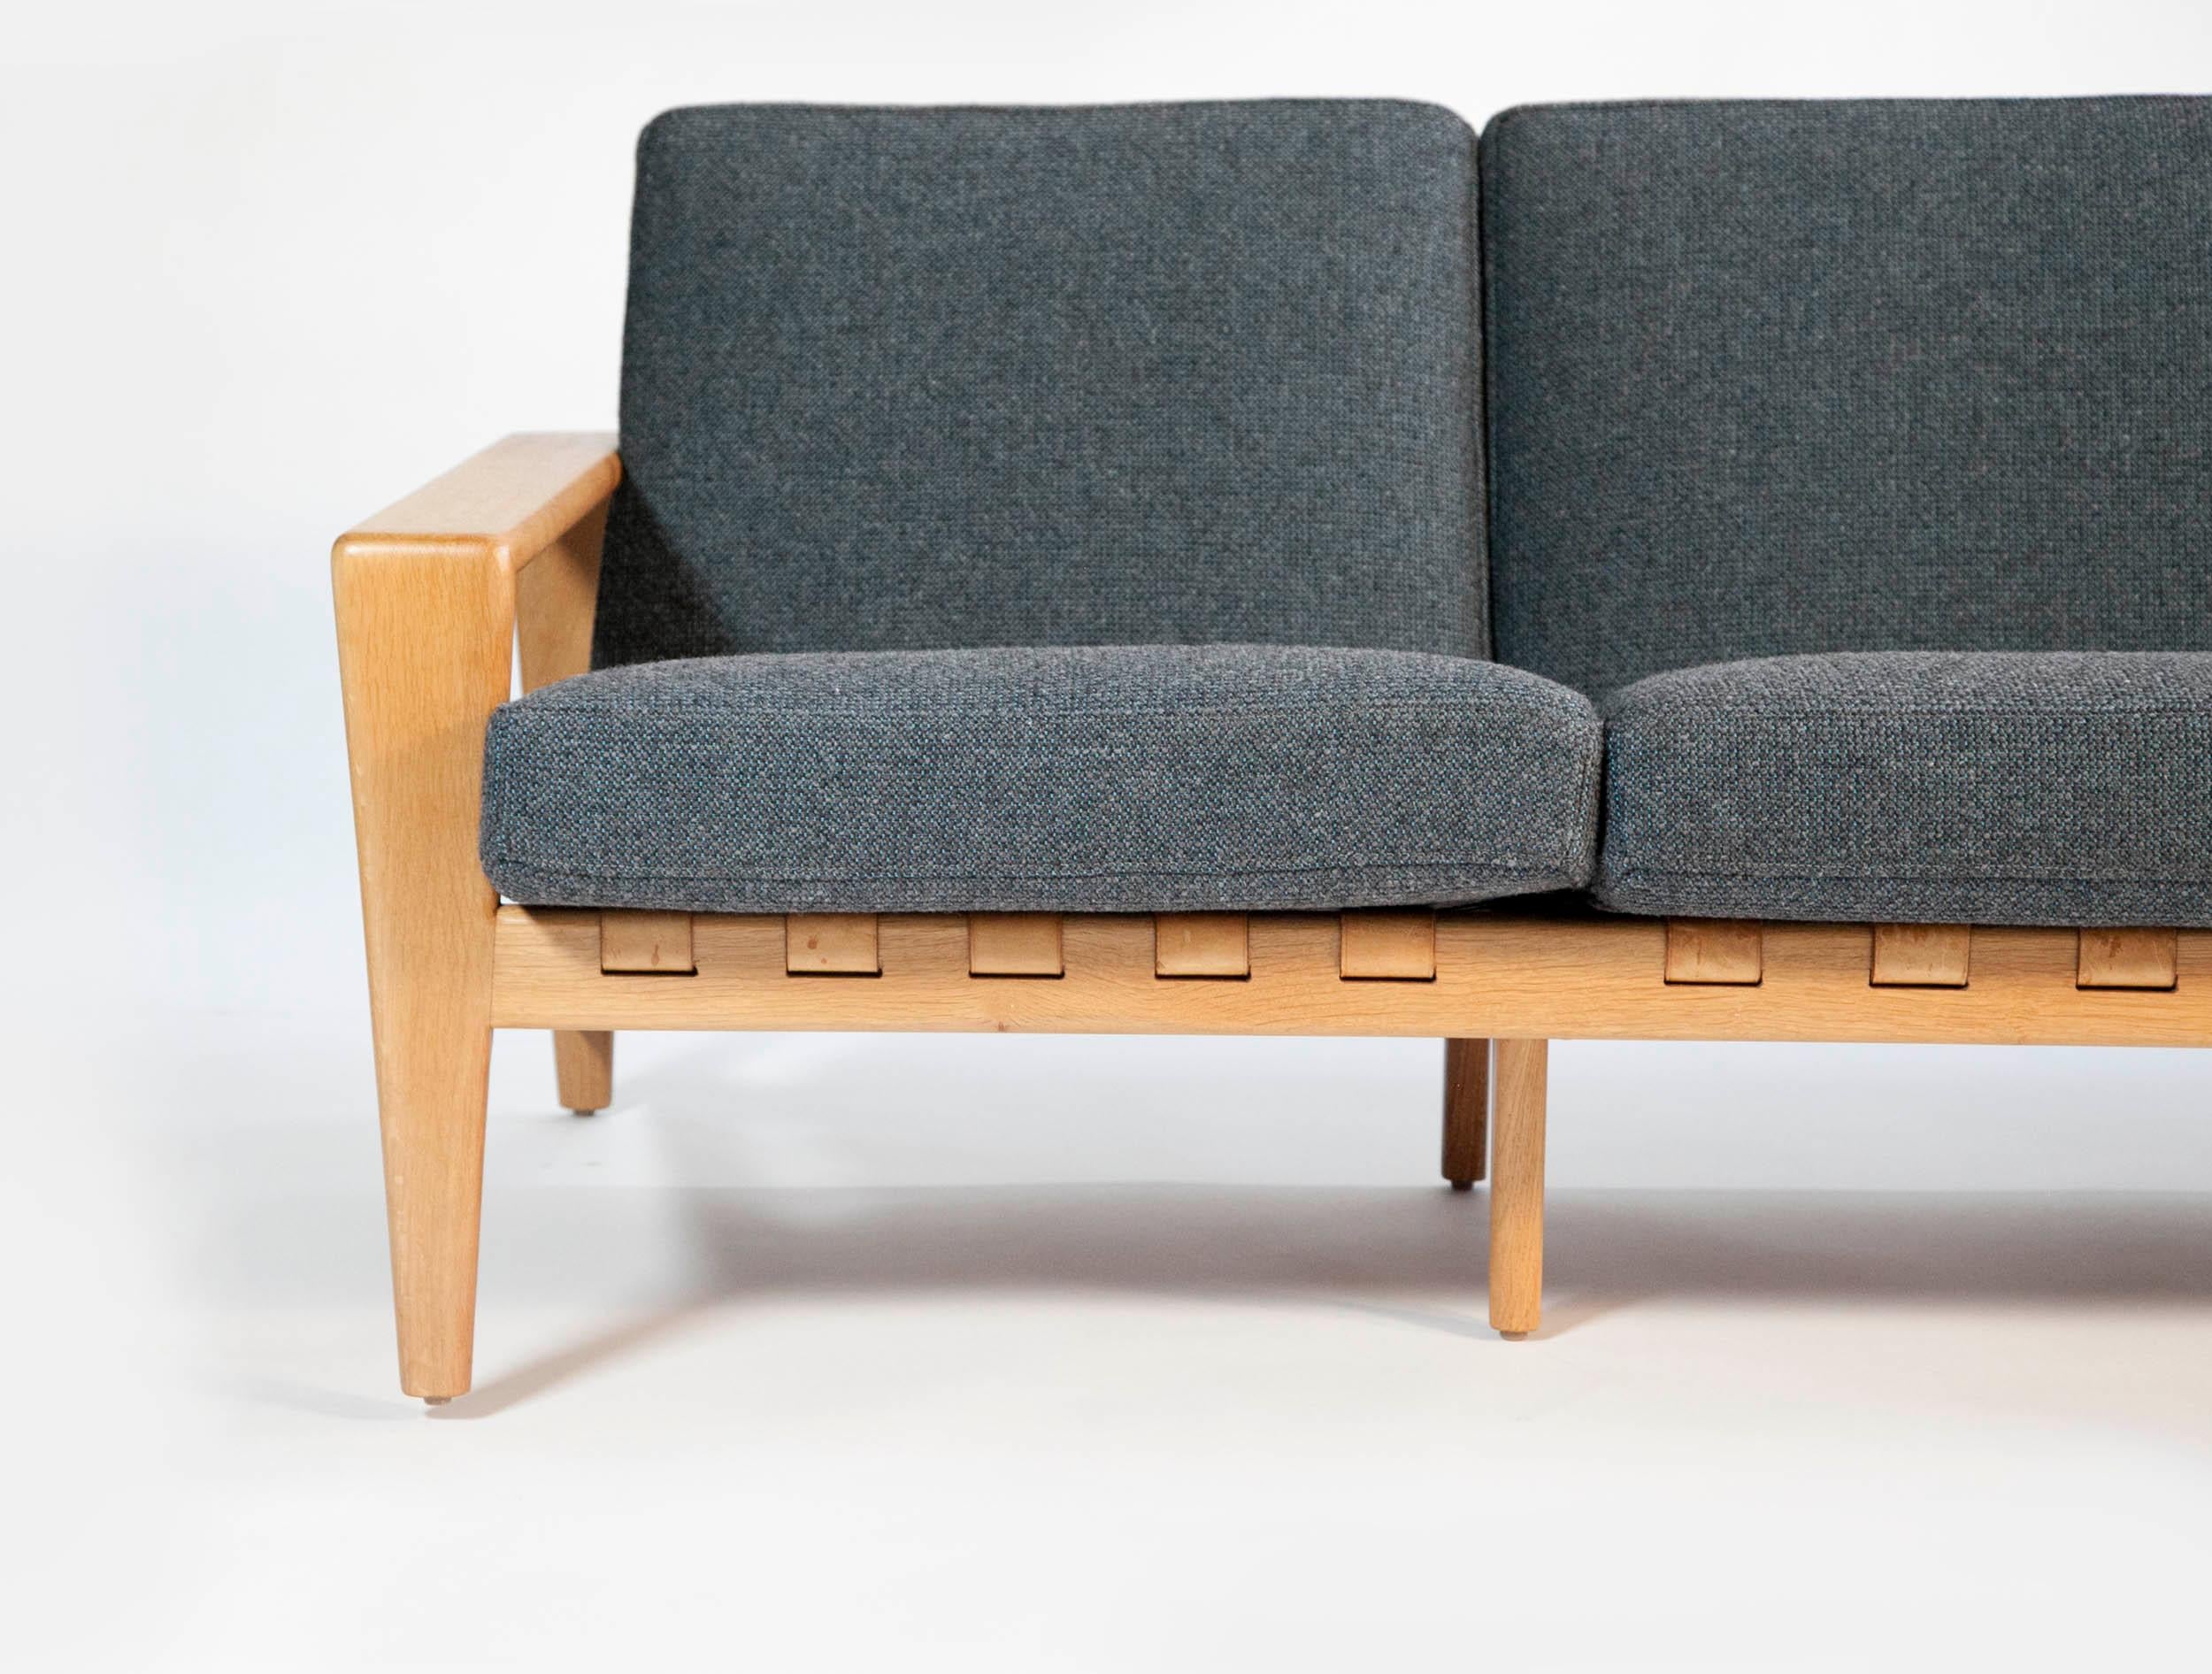 Lacquered Svante Skogh Four-Seat Bodö Sofa by Seffle Möbelfabrik in Sweden, 1960s For Sale